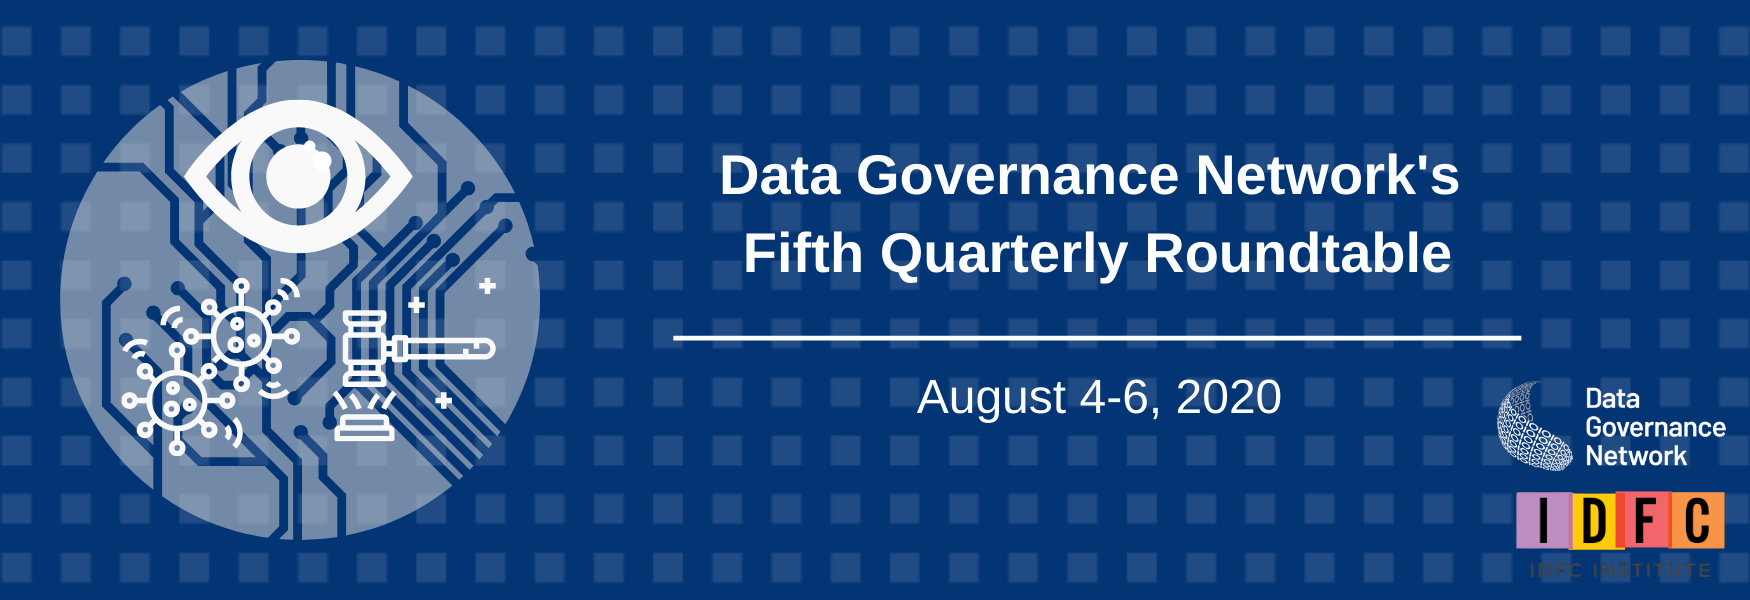 Data Governance Network's Fifth Quarterly Roundtable